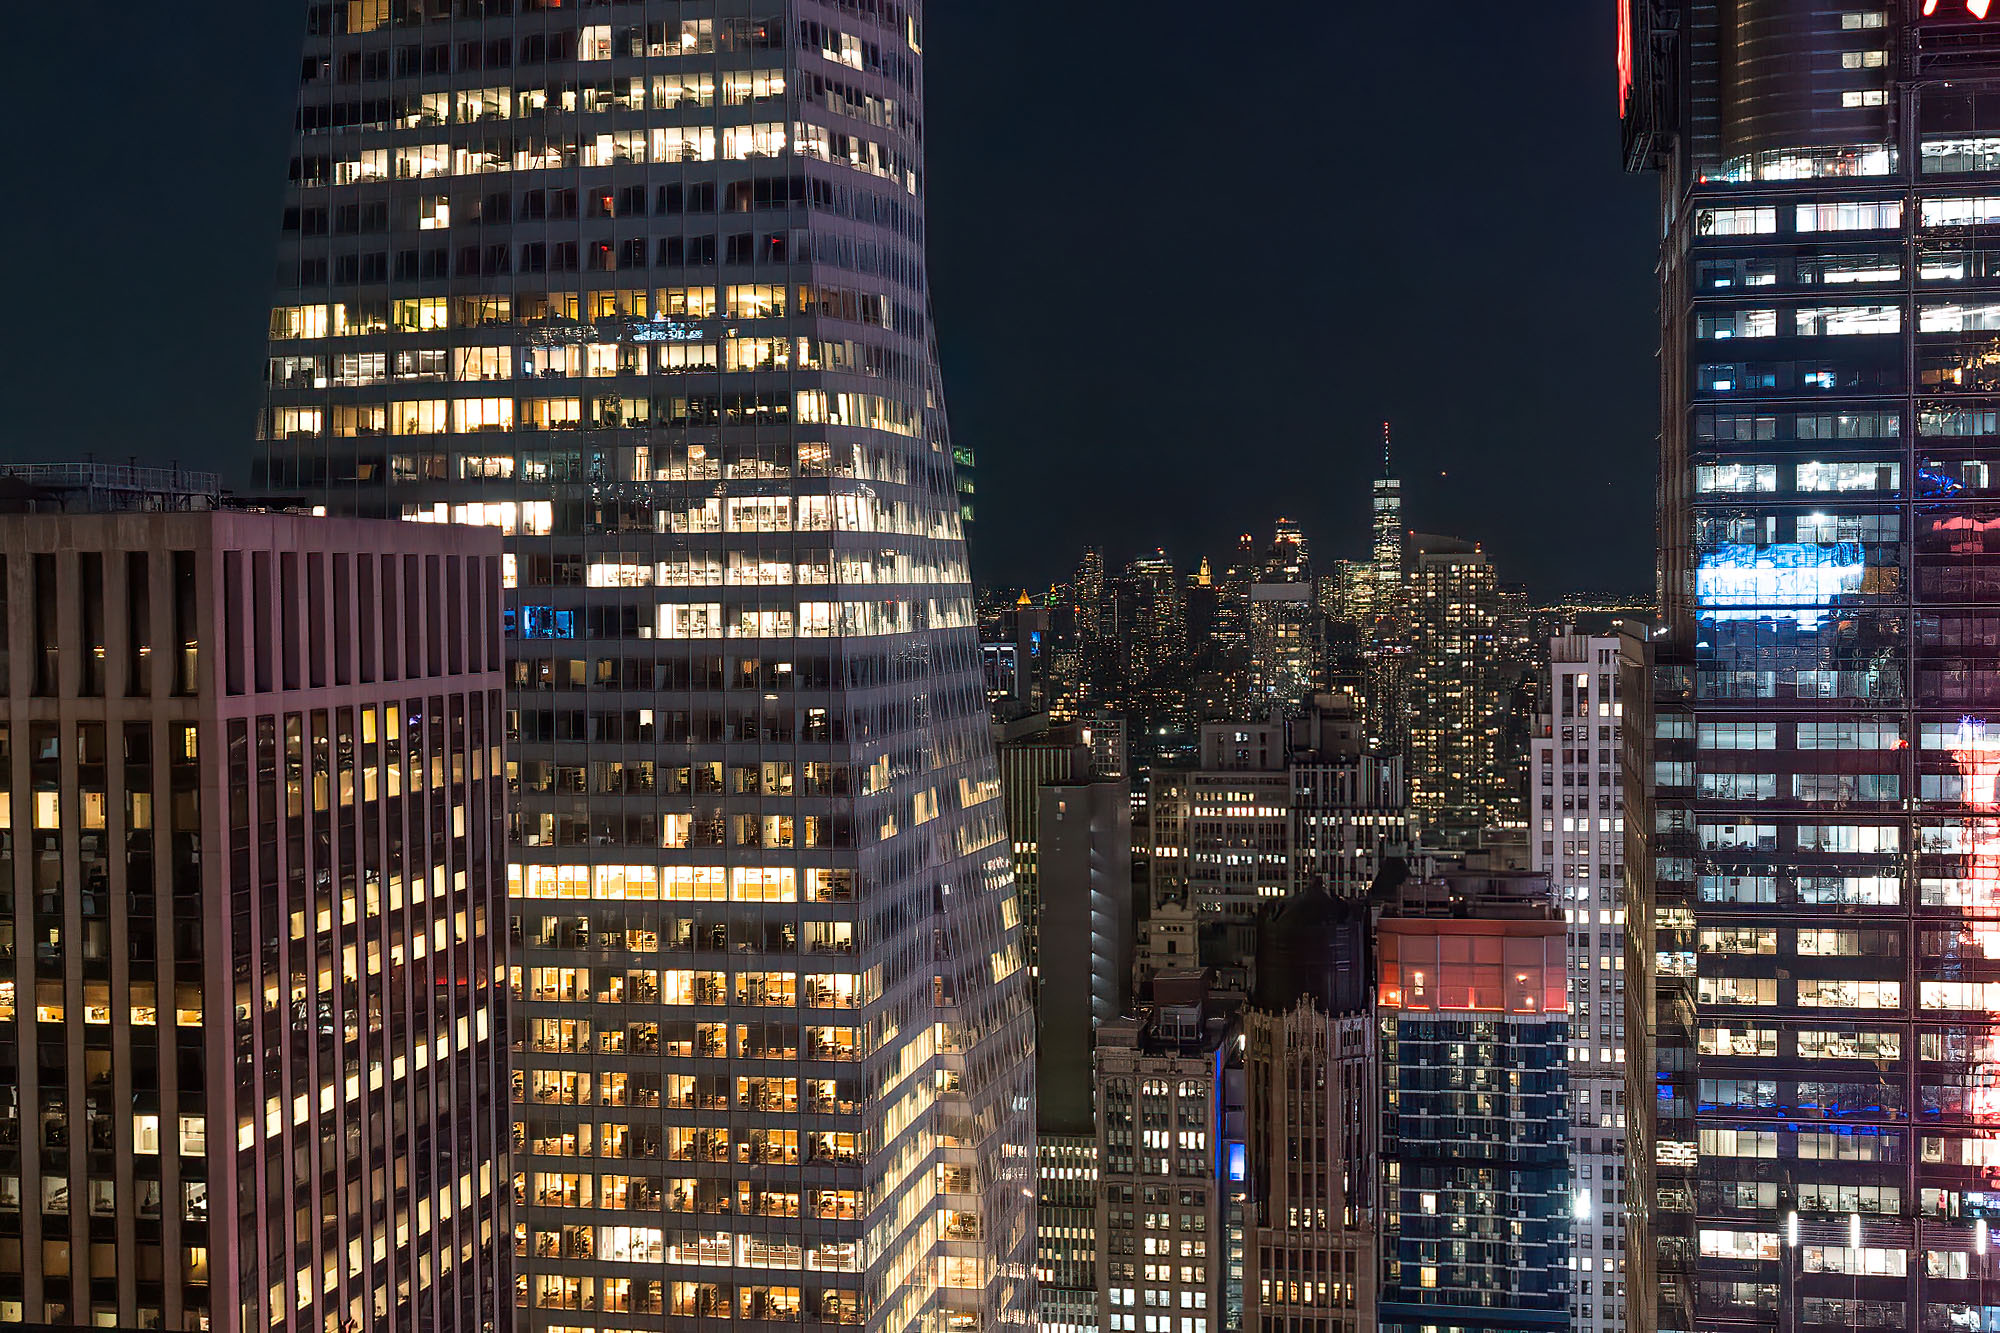 Hotels at night new york city